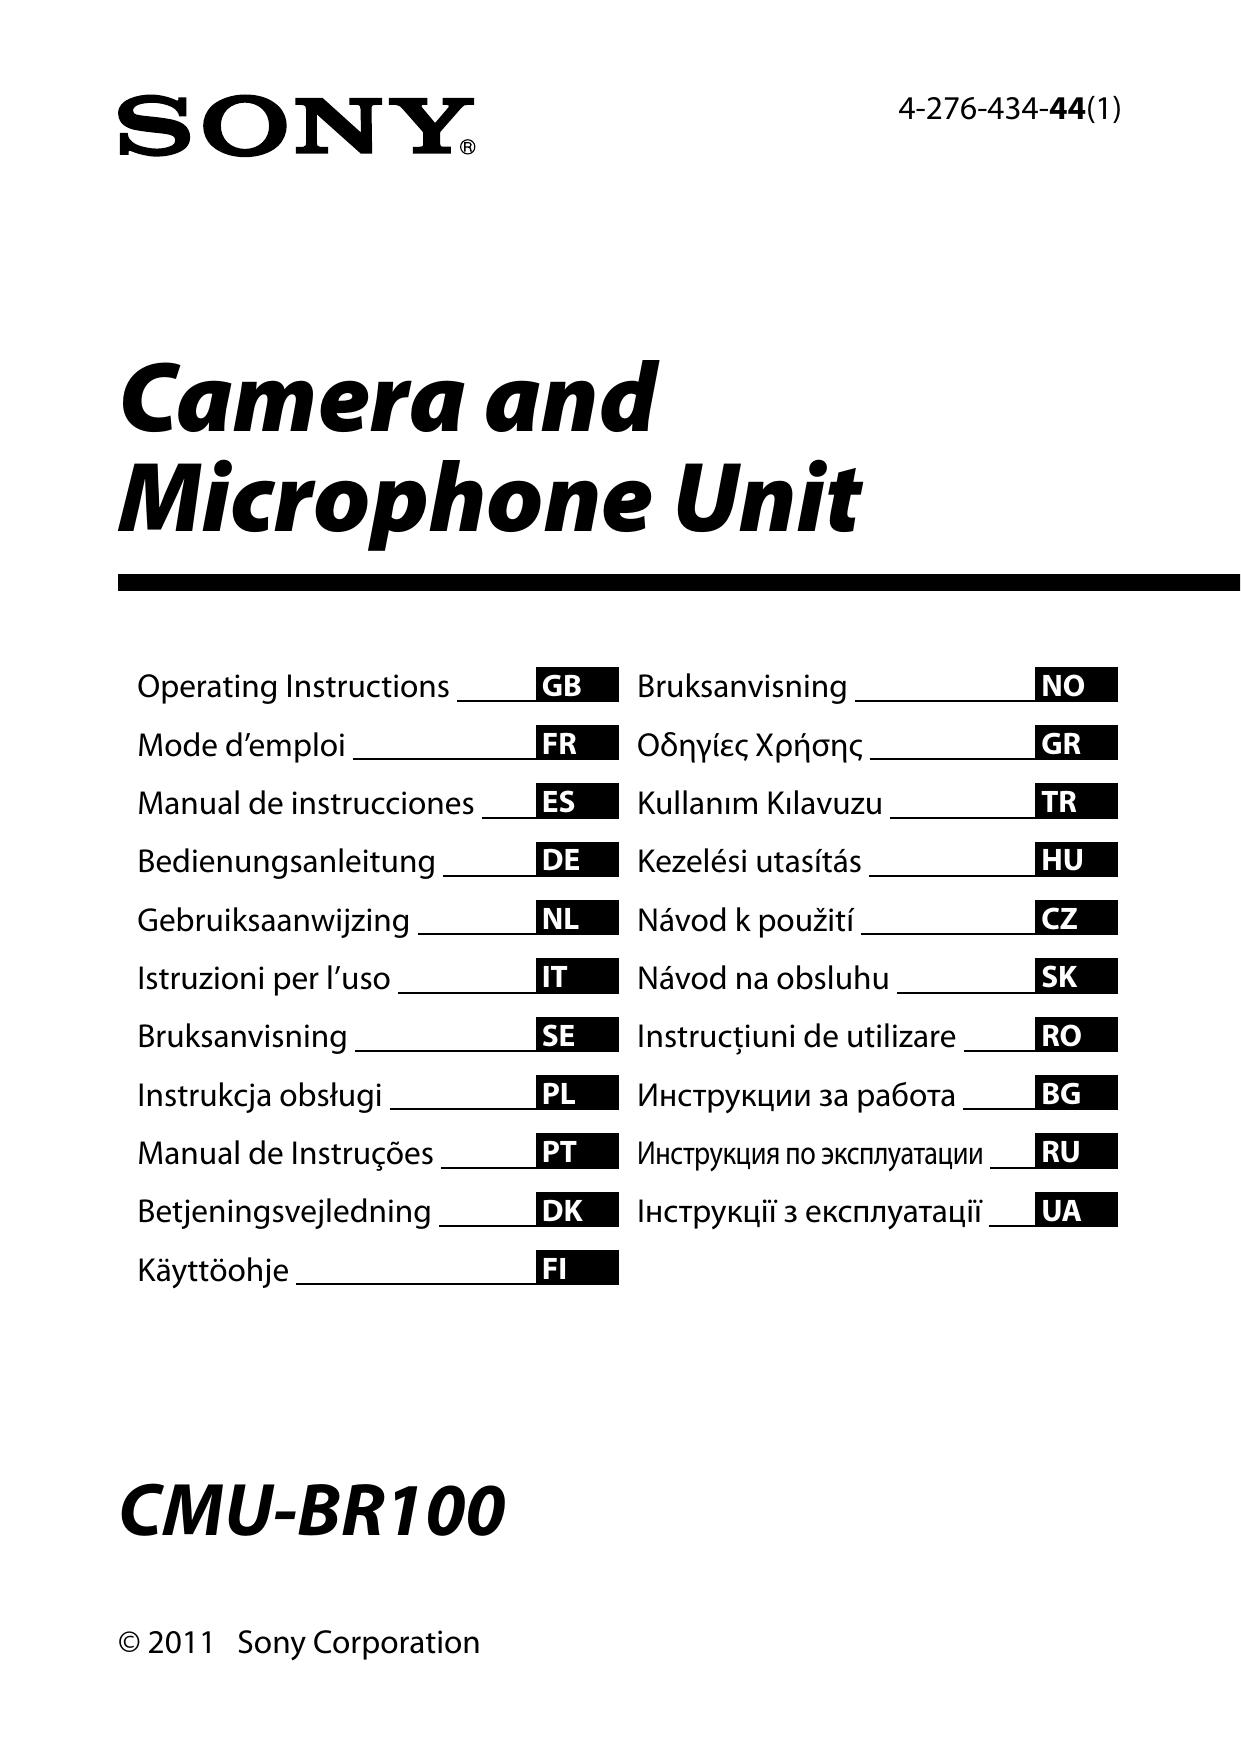 Sony CMU-BR100 Microphone User Manual